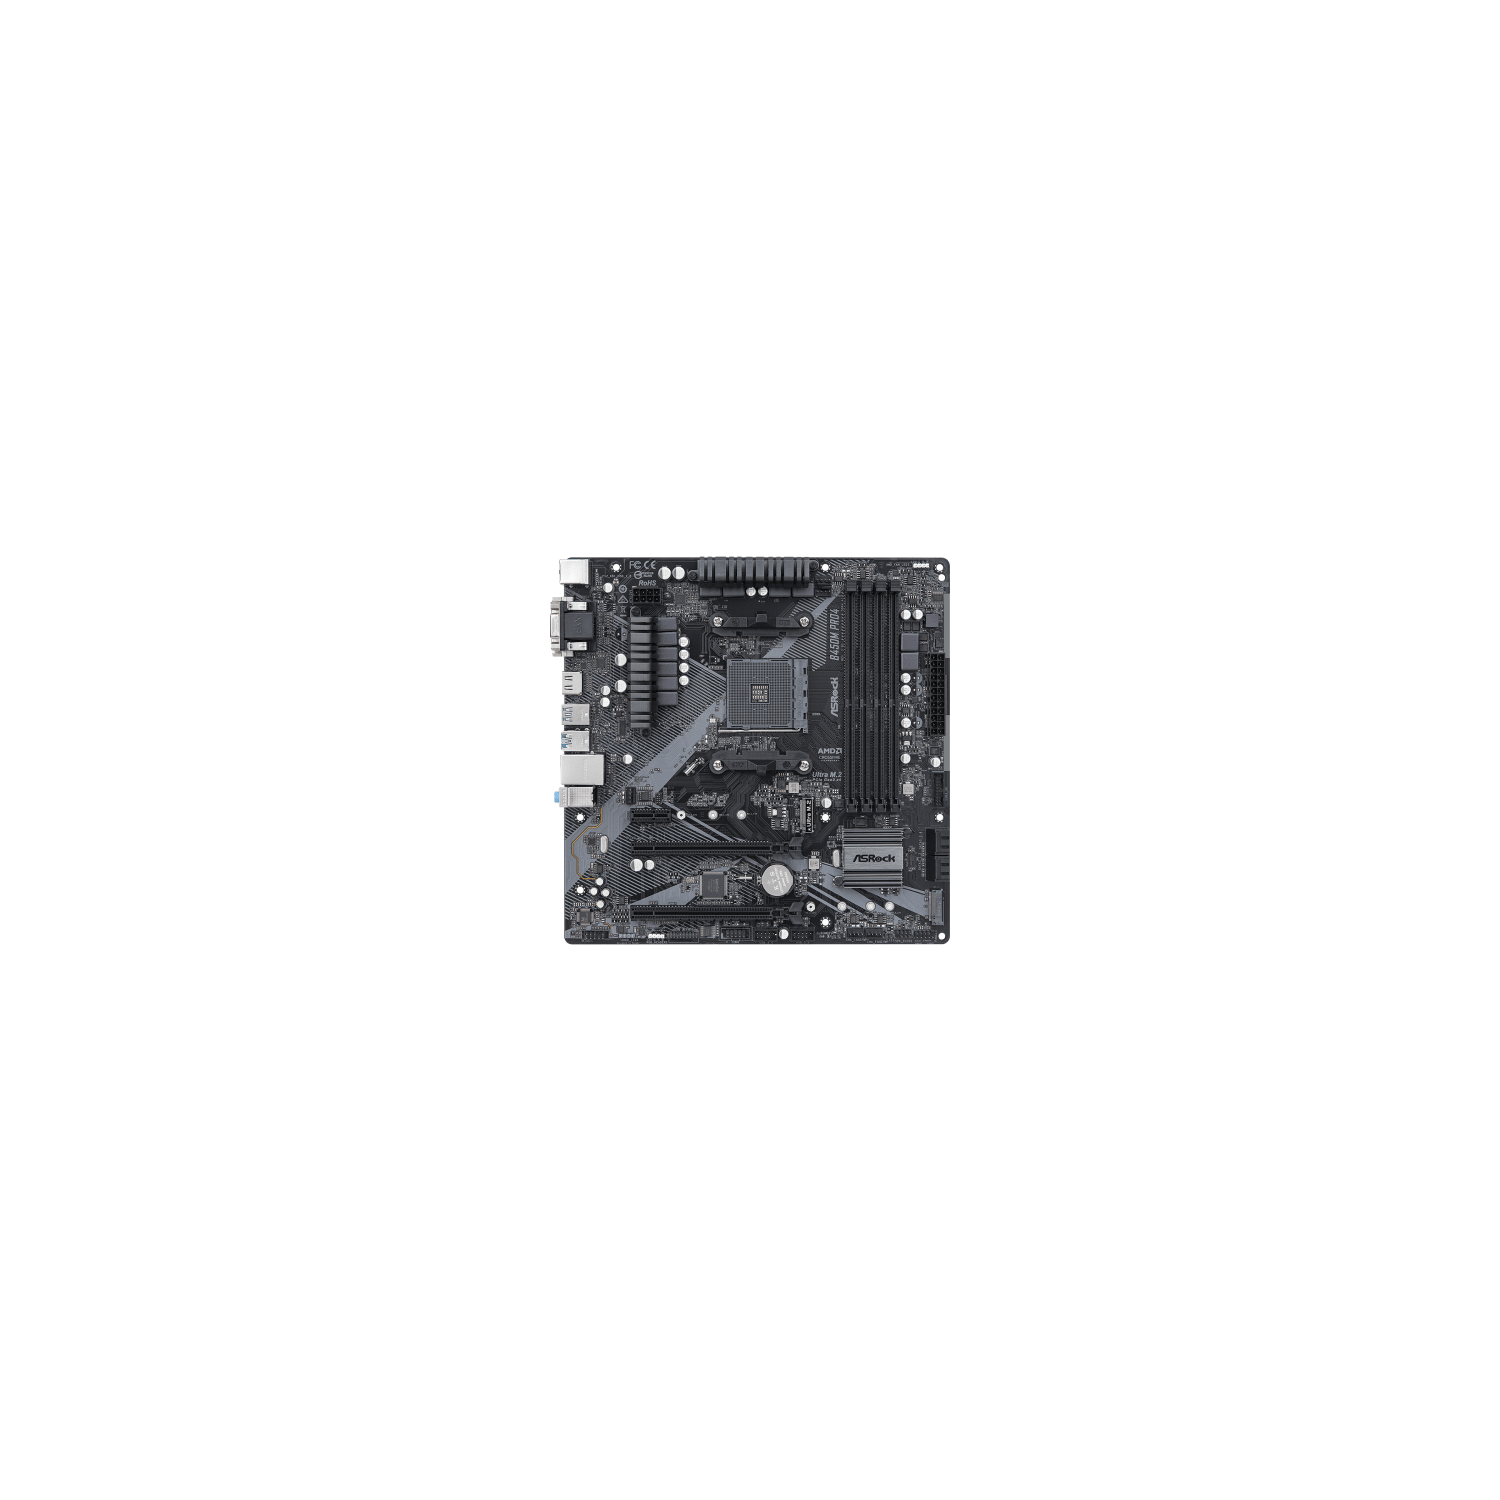 ASRock Motherboard B450M PRO4 R2.0 AMD AM4 Promontory B450 Max128G DR4 Micro ATX Retail